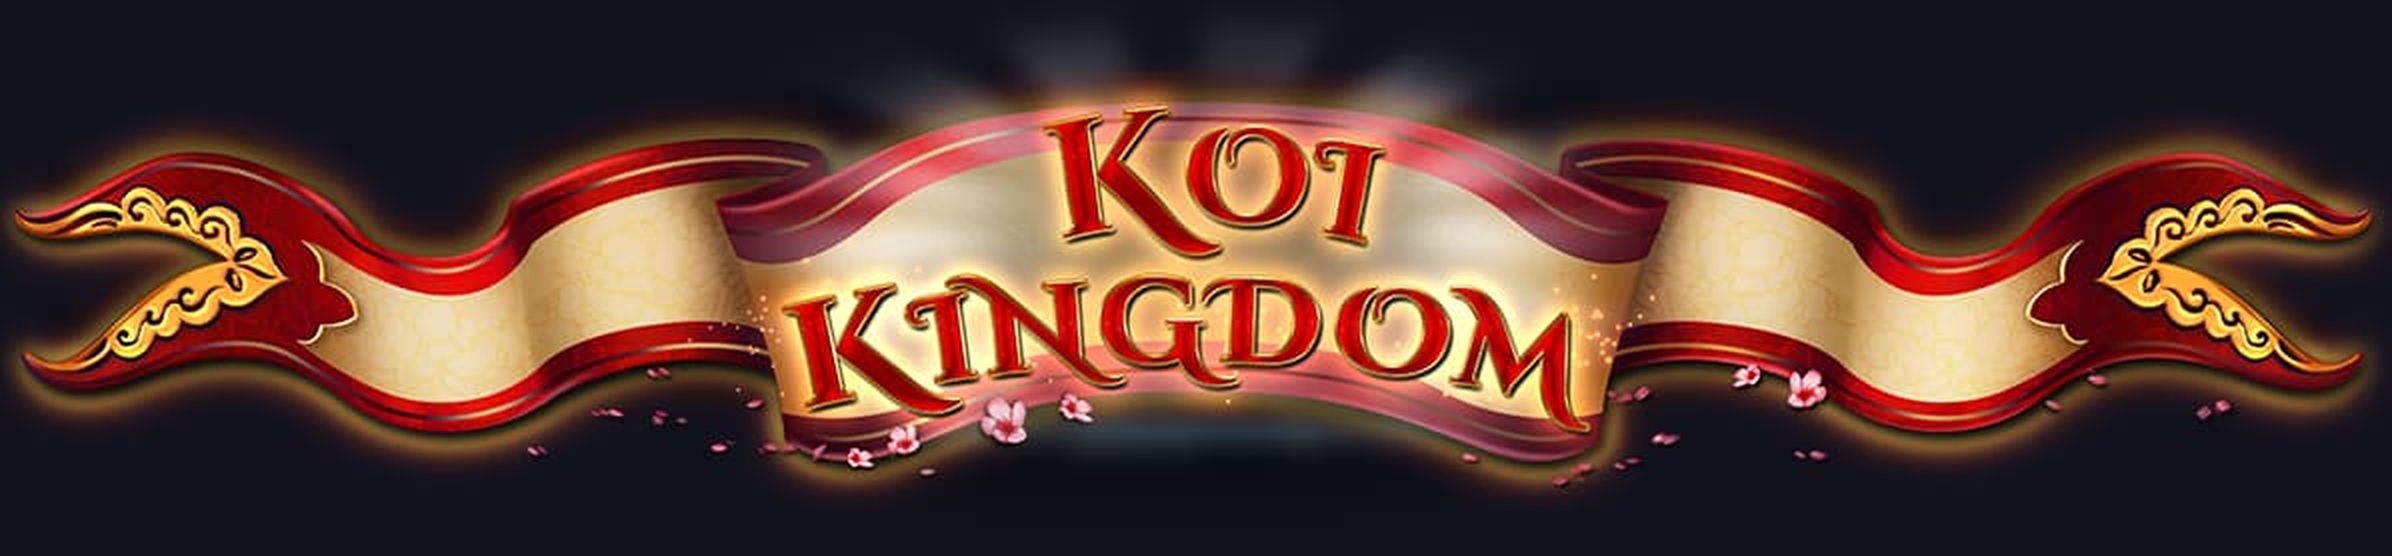 Koi Kingdom demo